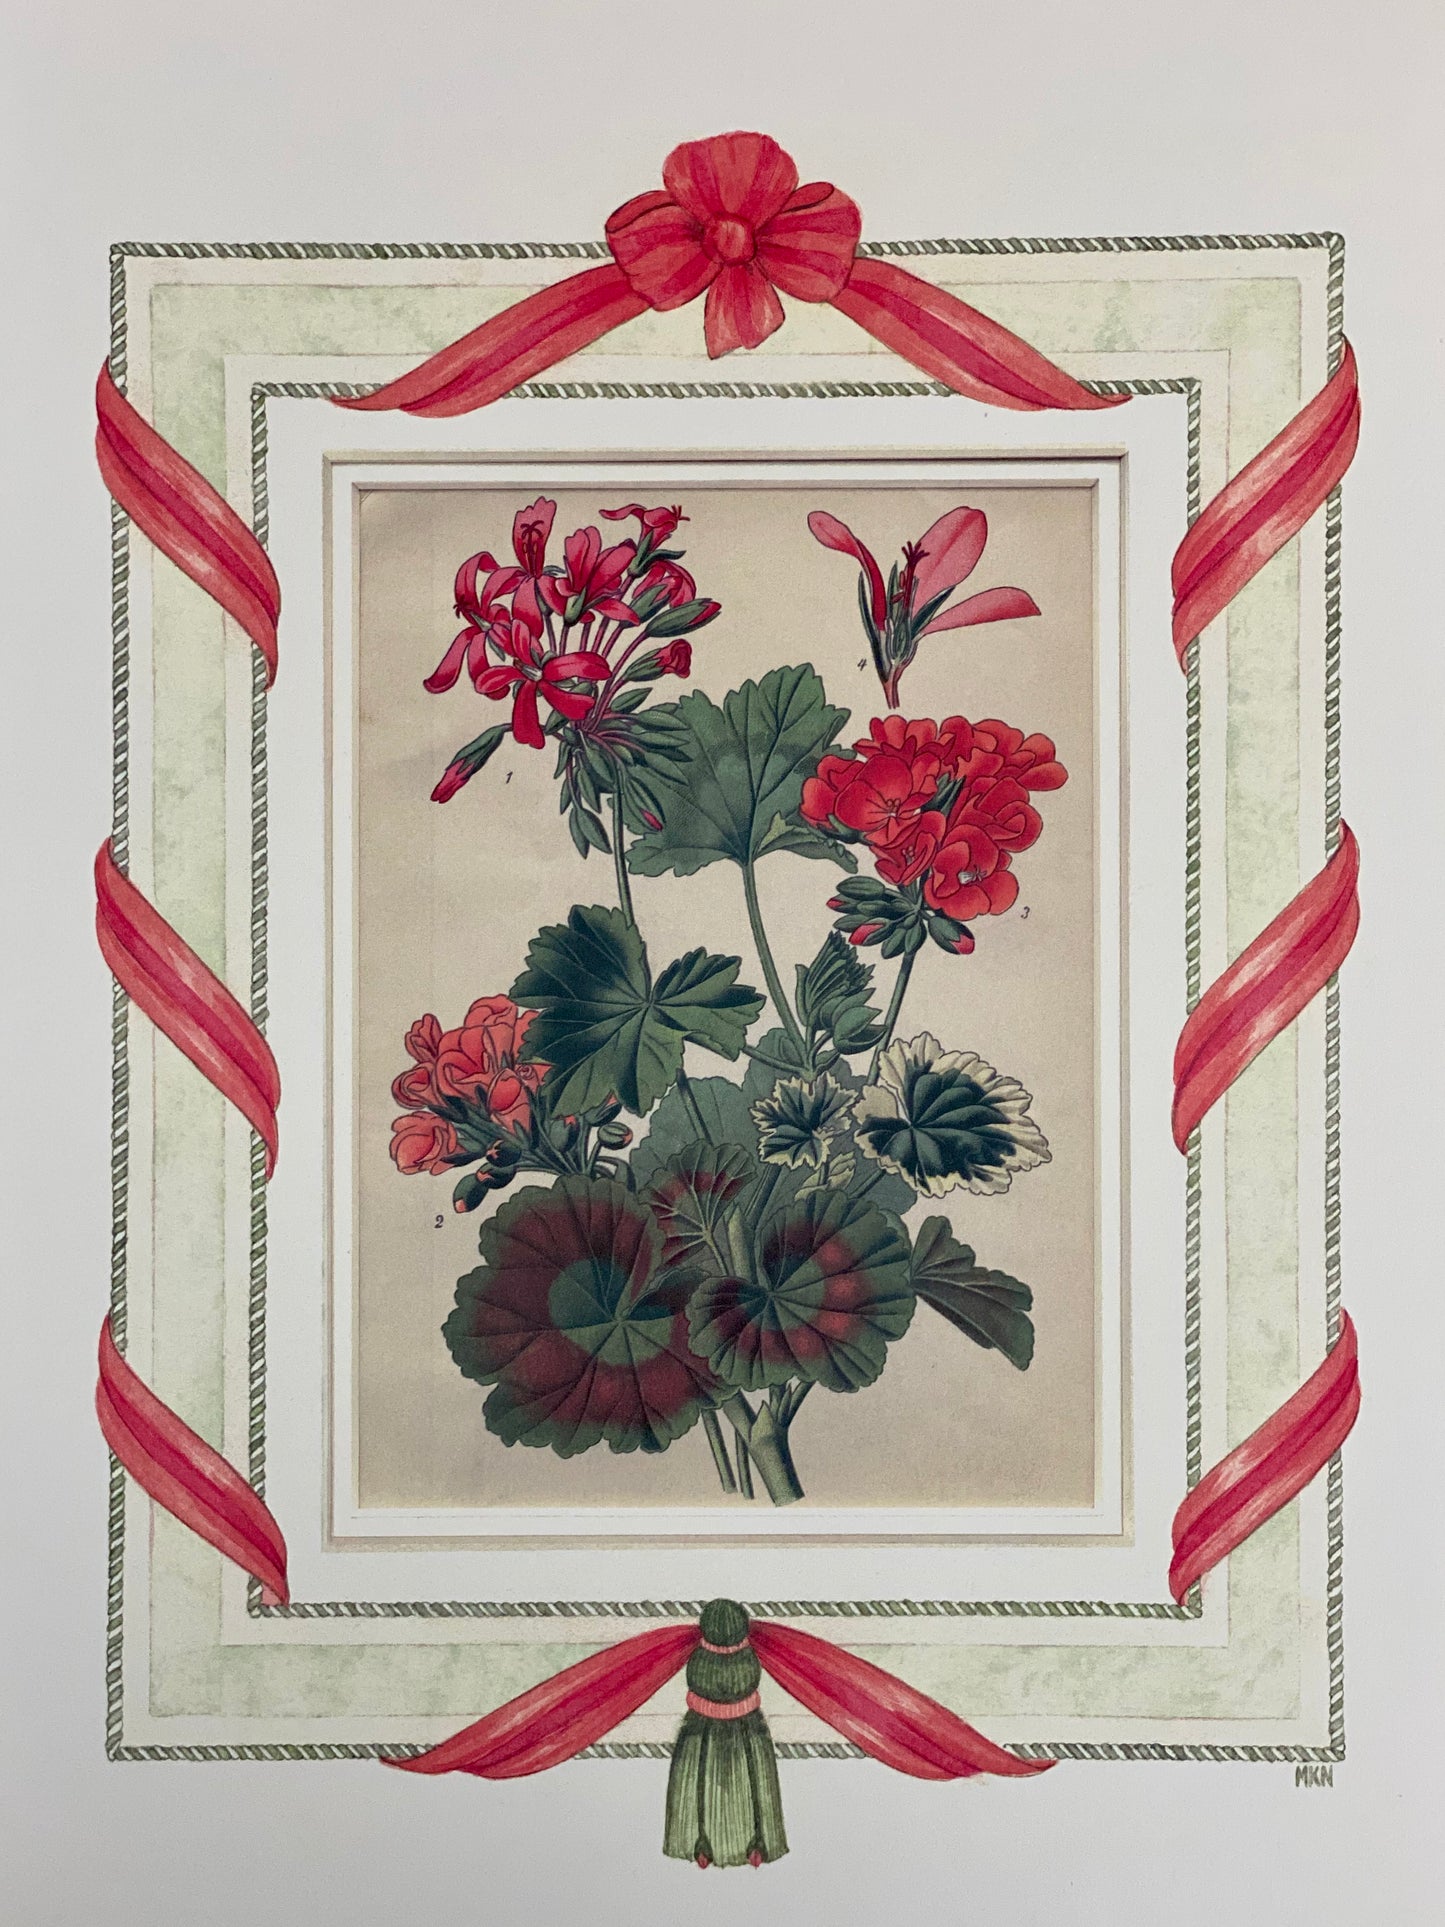 Geranium antique print with hand-painted ribbon border